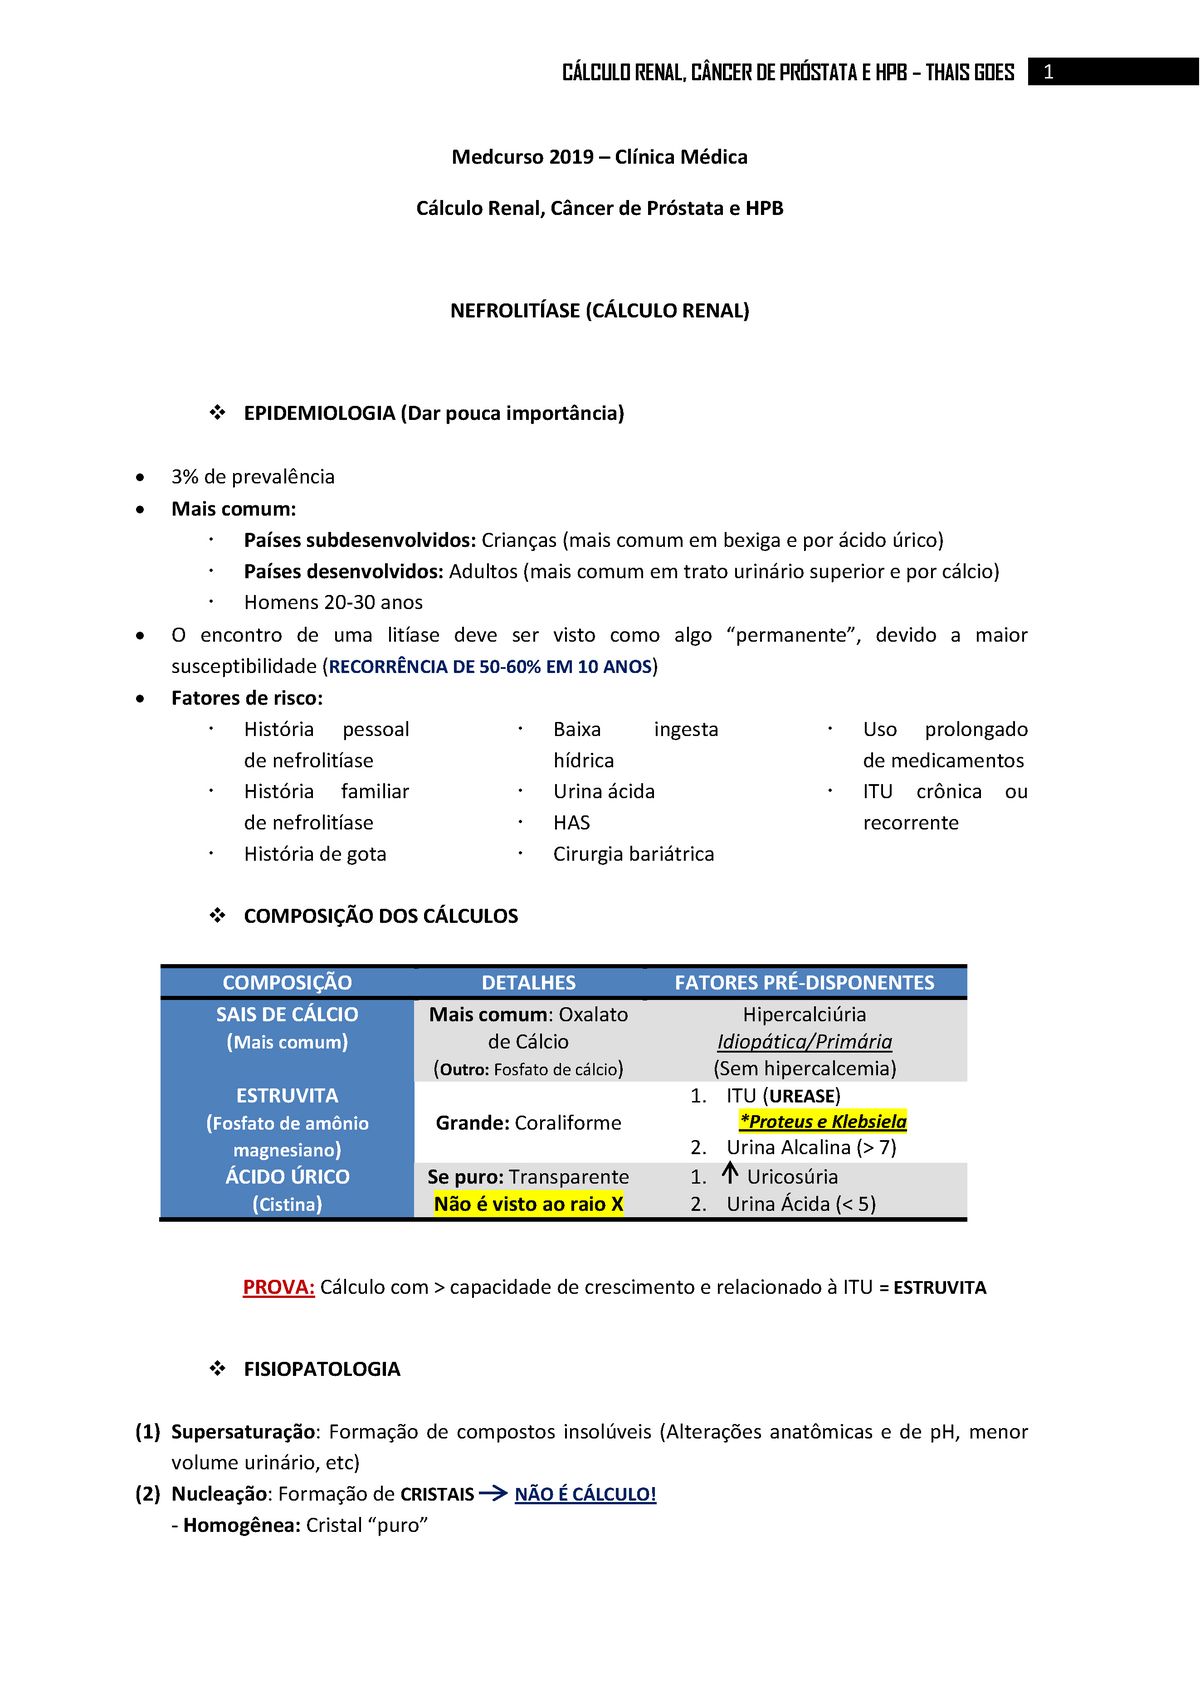 medcurso 2019 pdf